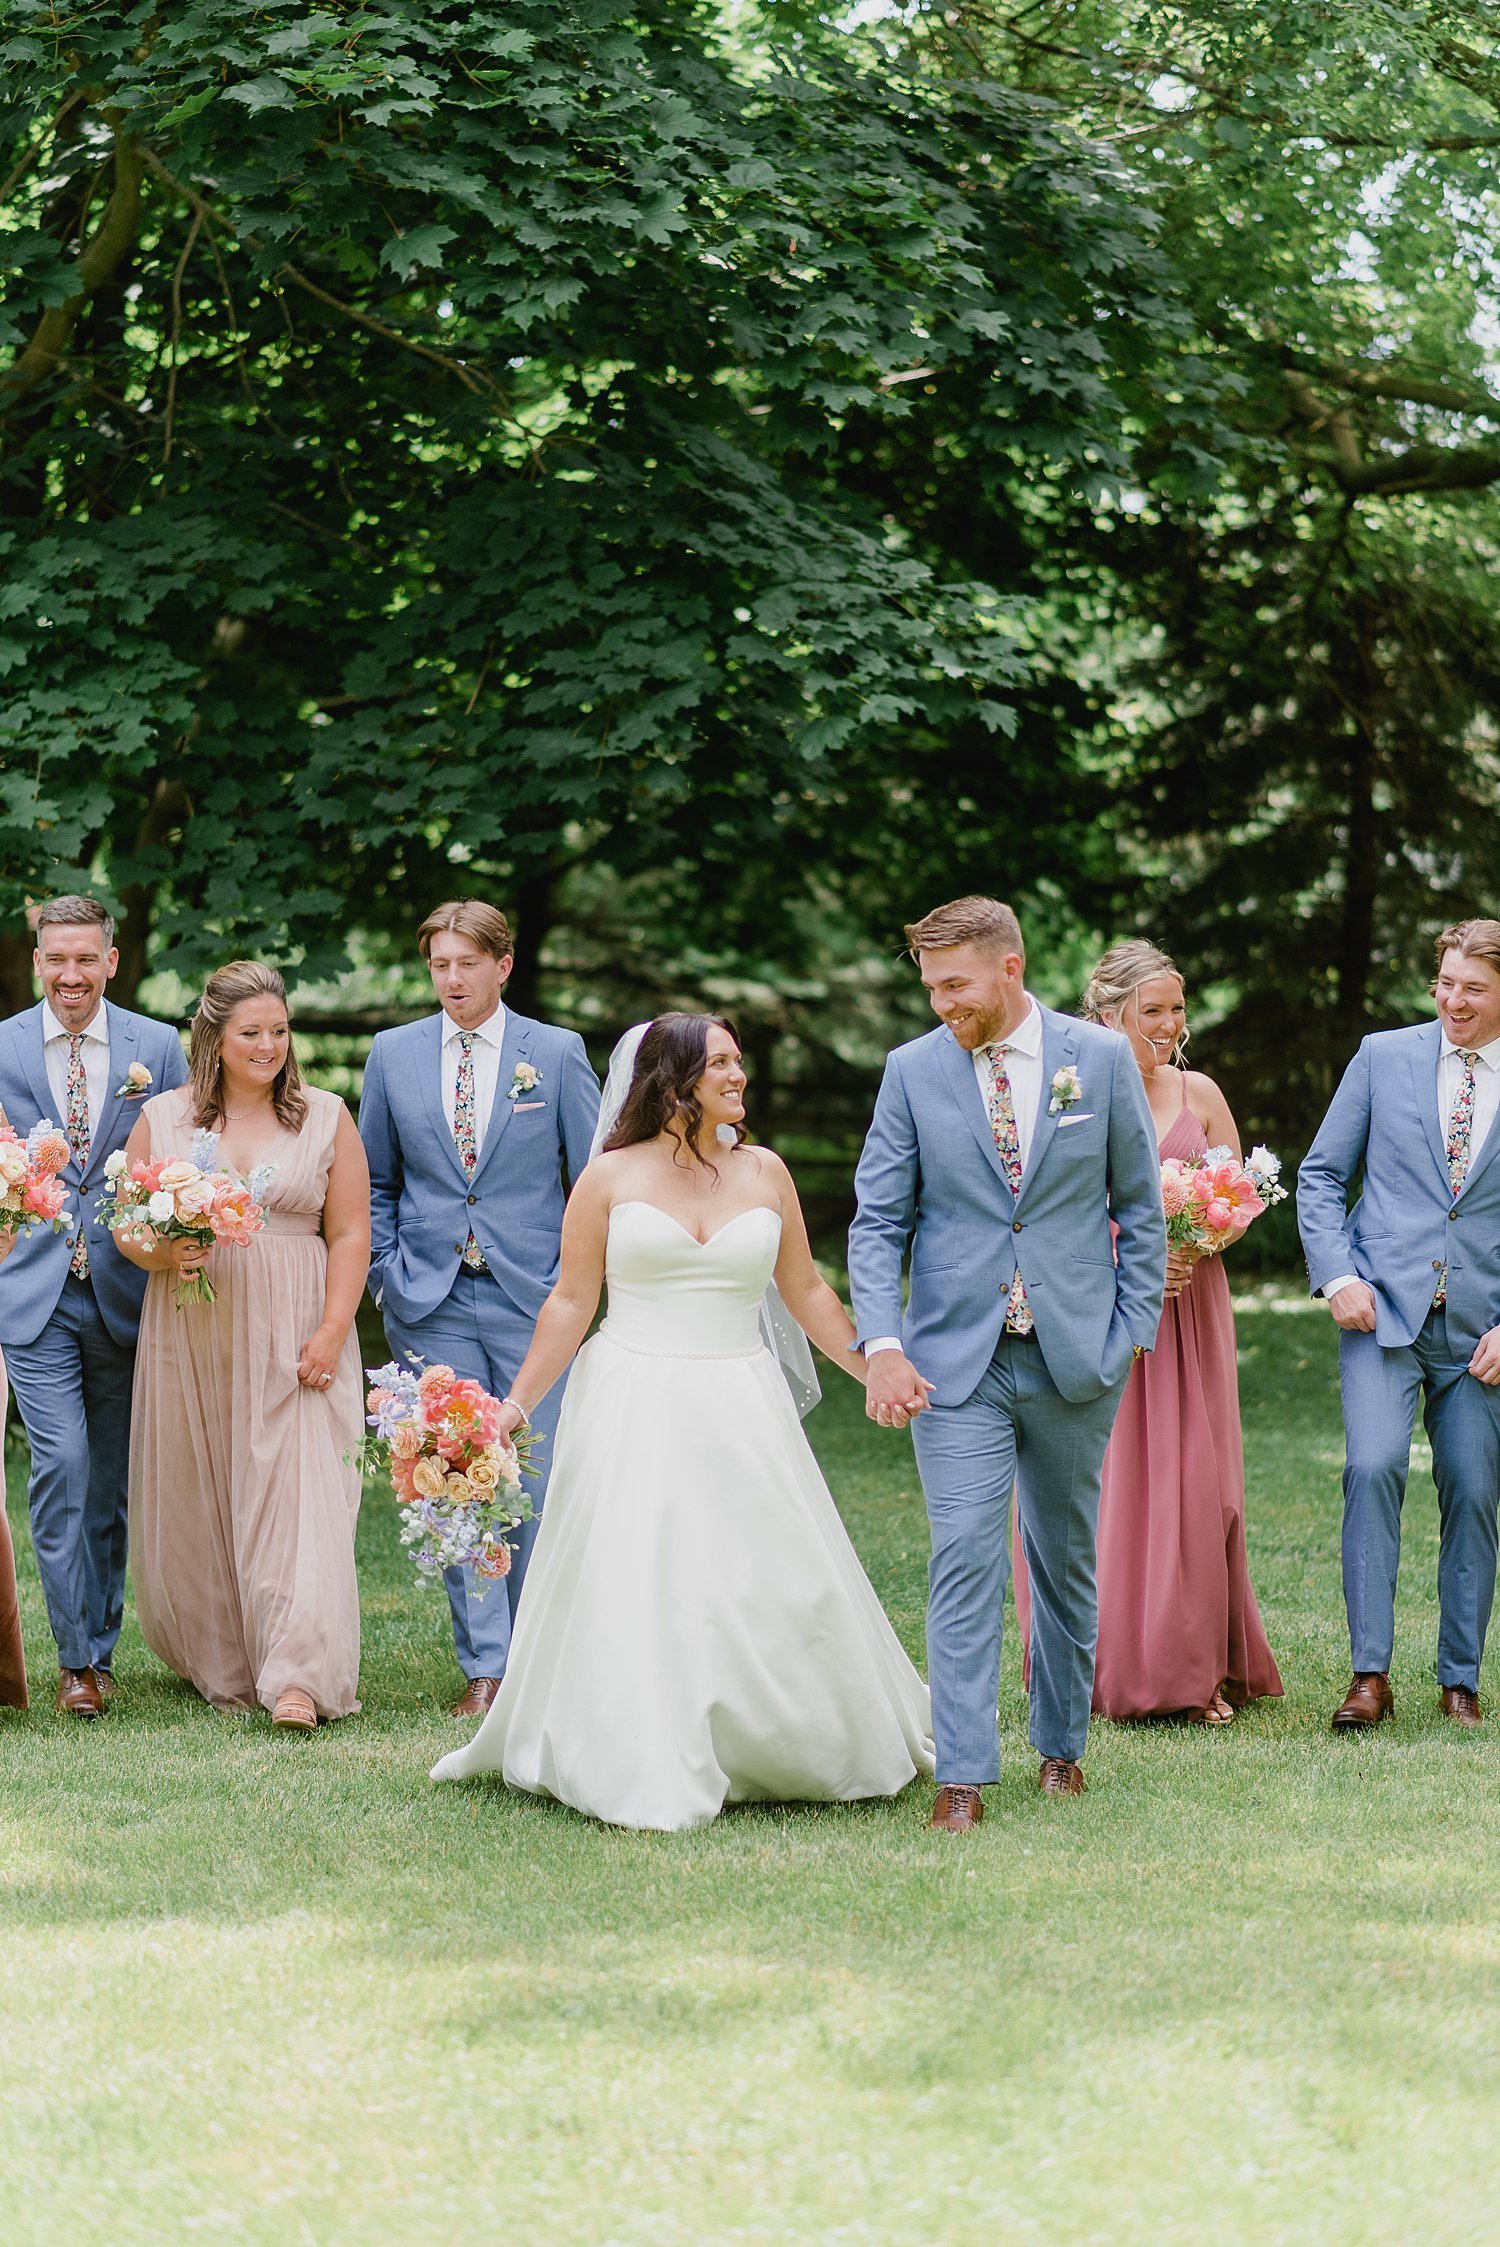 Casa Dea Winery Wedding in Prince Edward County | Prince Edward County Wedding Photographer | Holly McMurter Photographs_0054.jpg